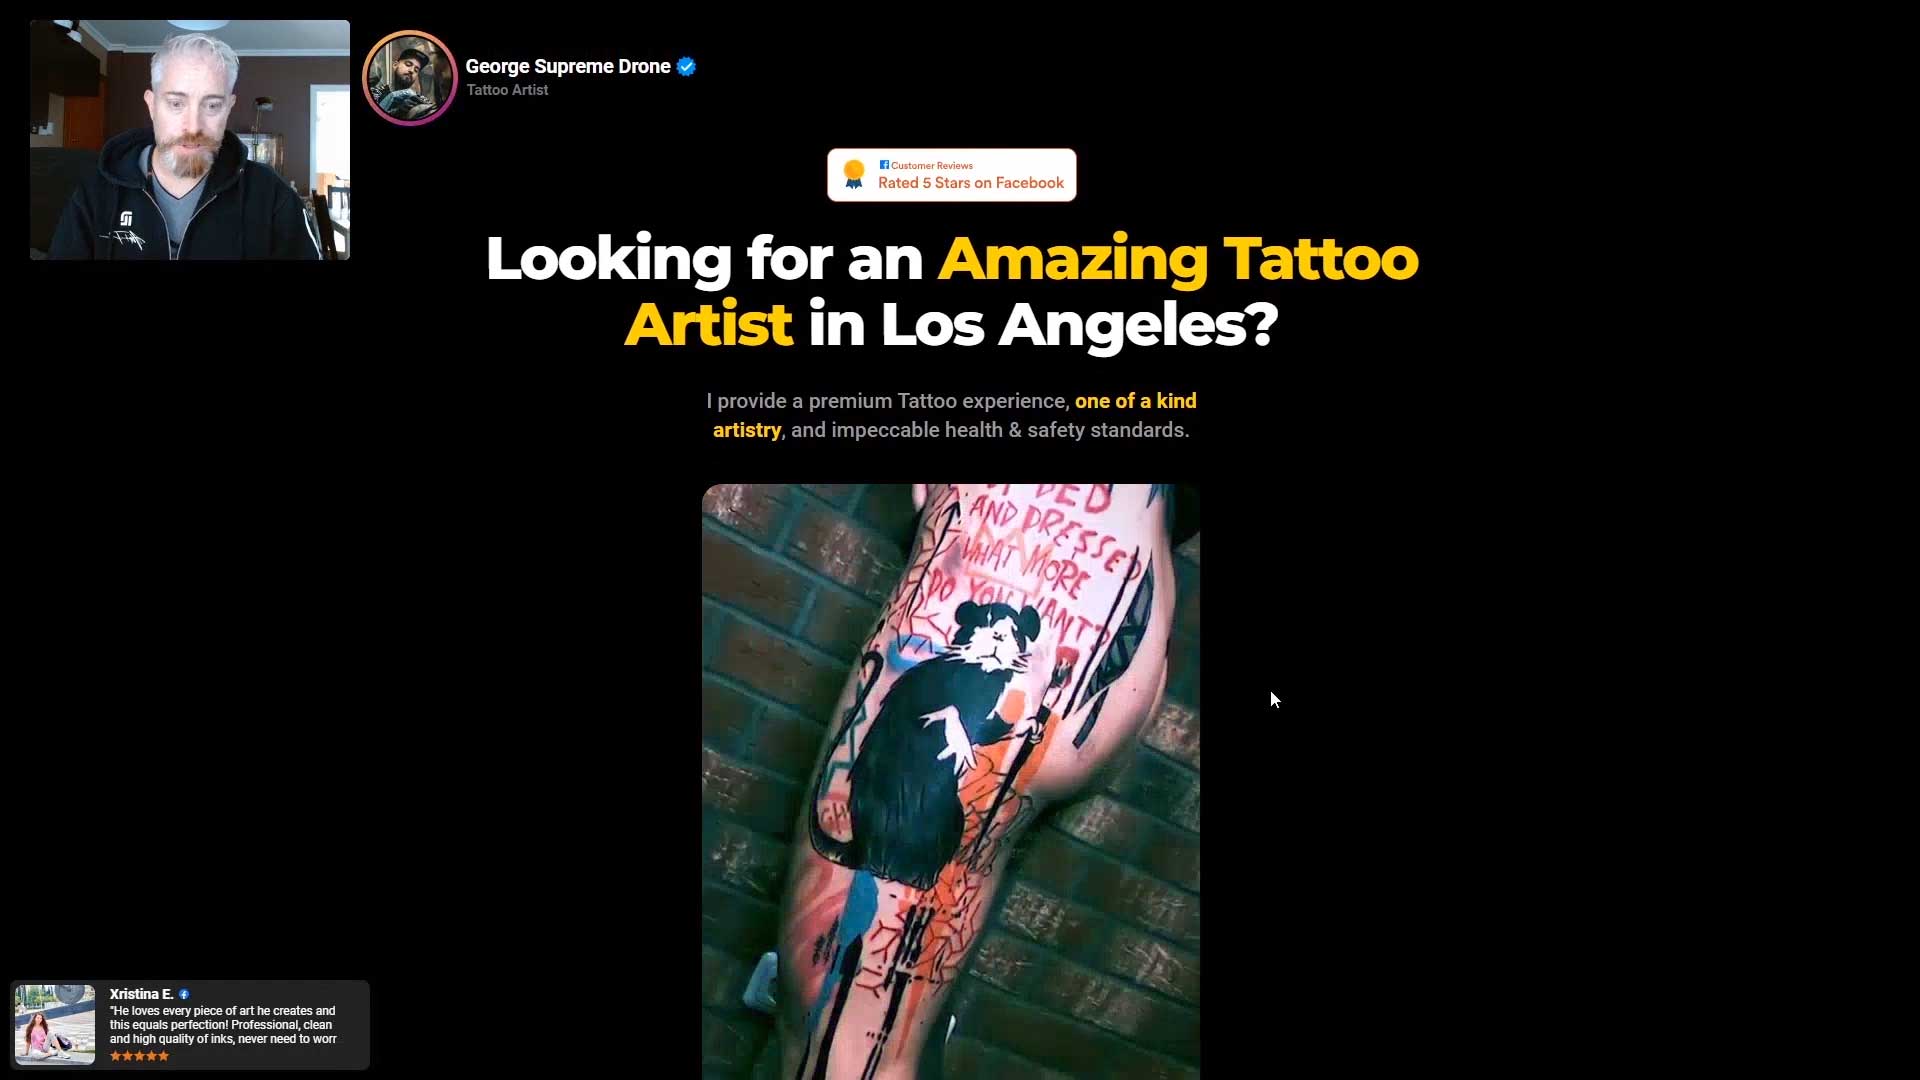 Tattoo Marketing - Landing Page Analysis